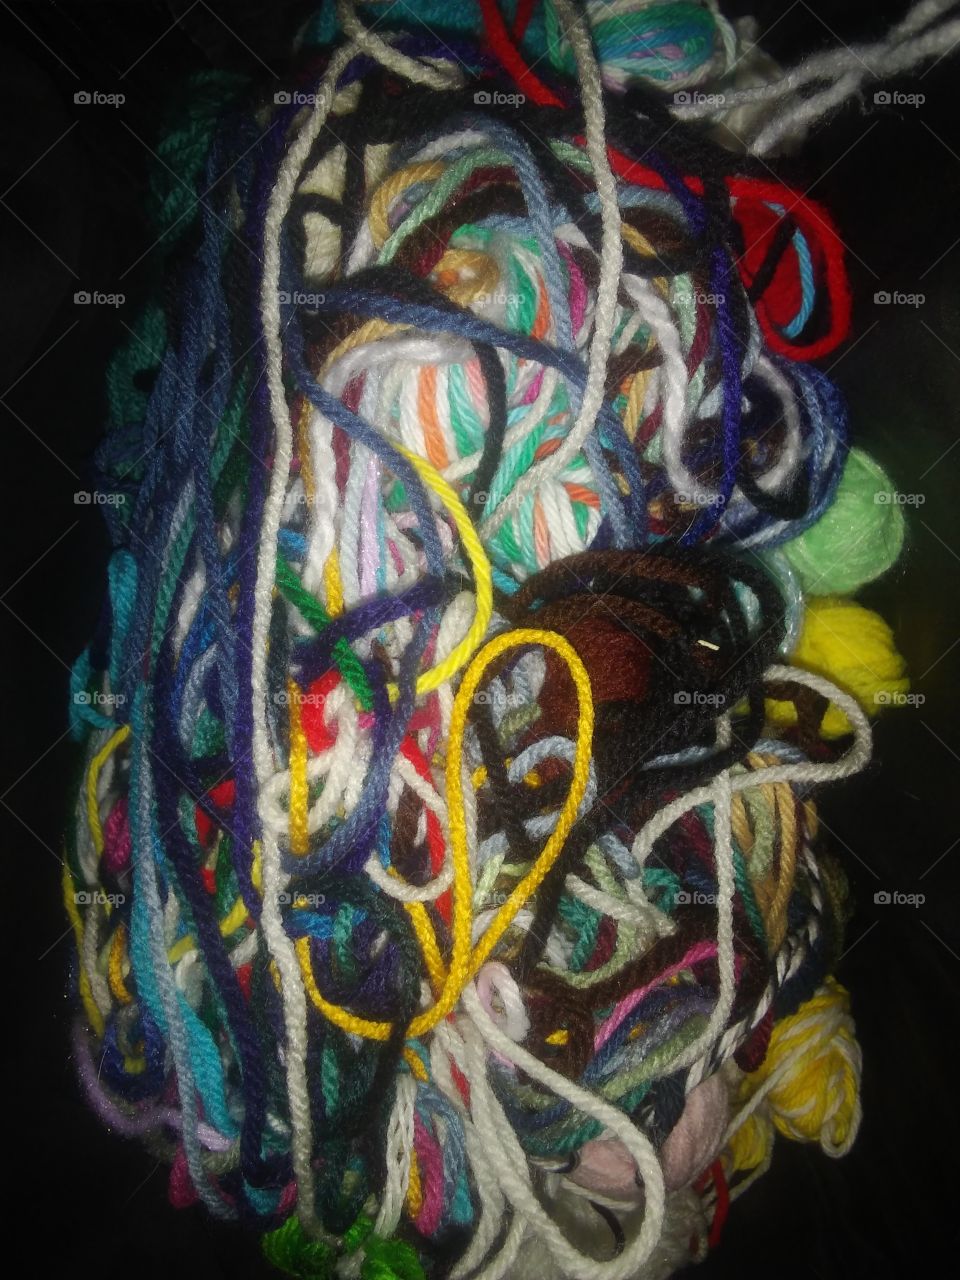 messy yarn